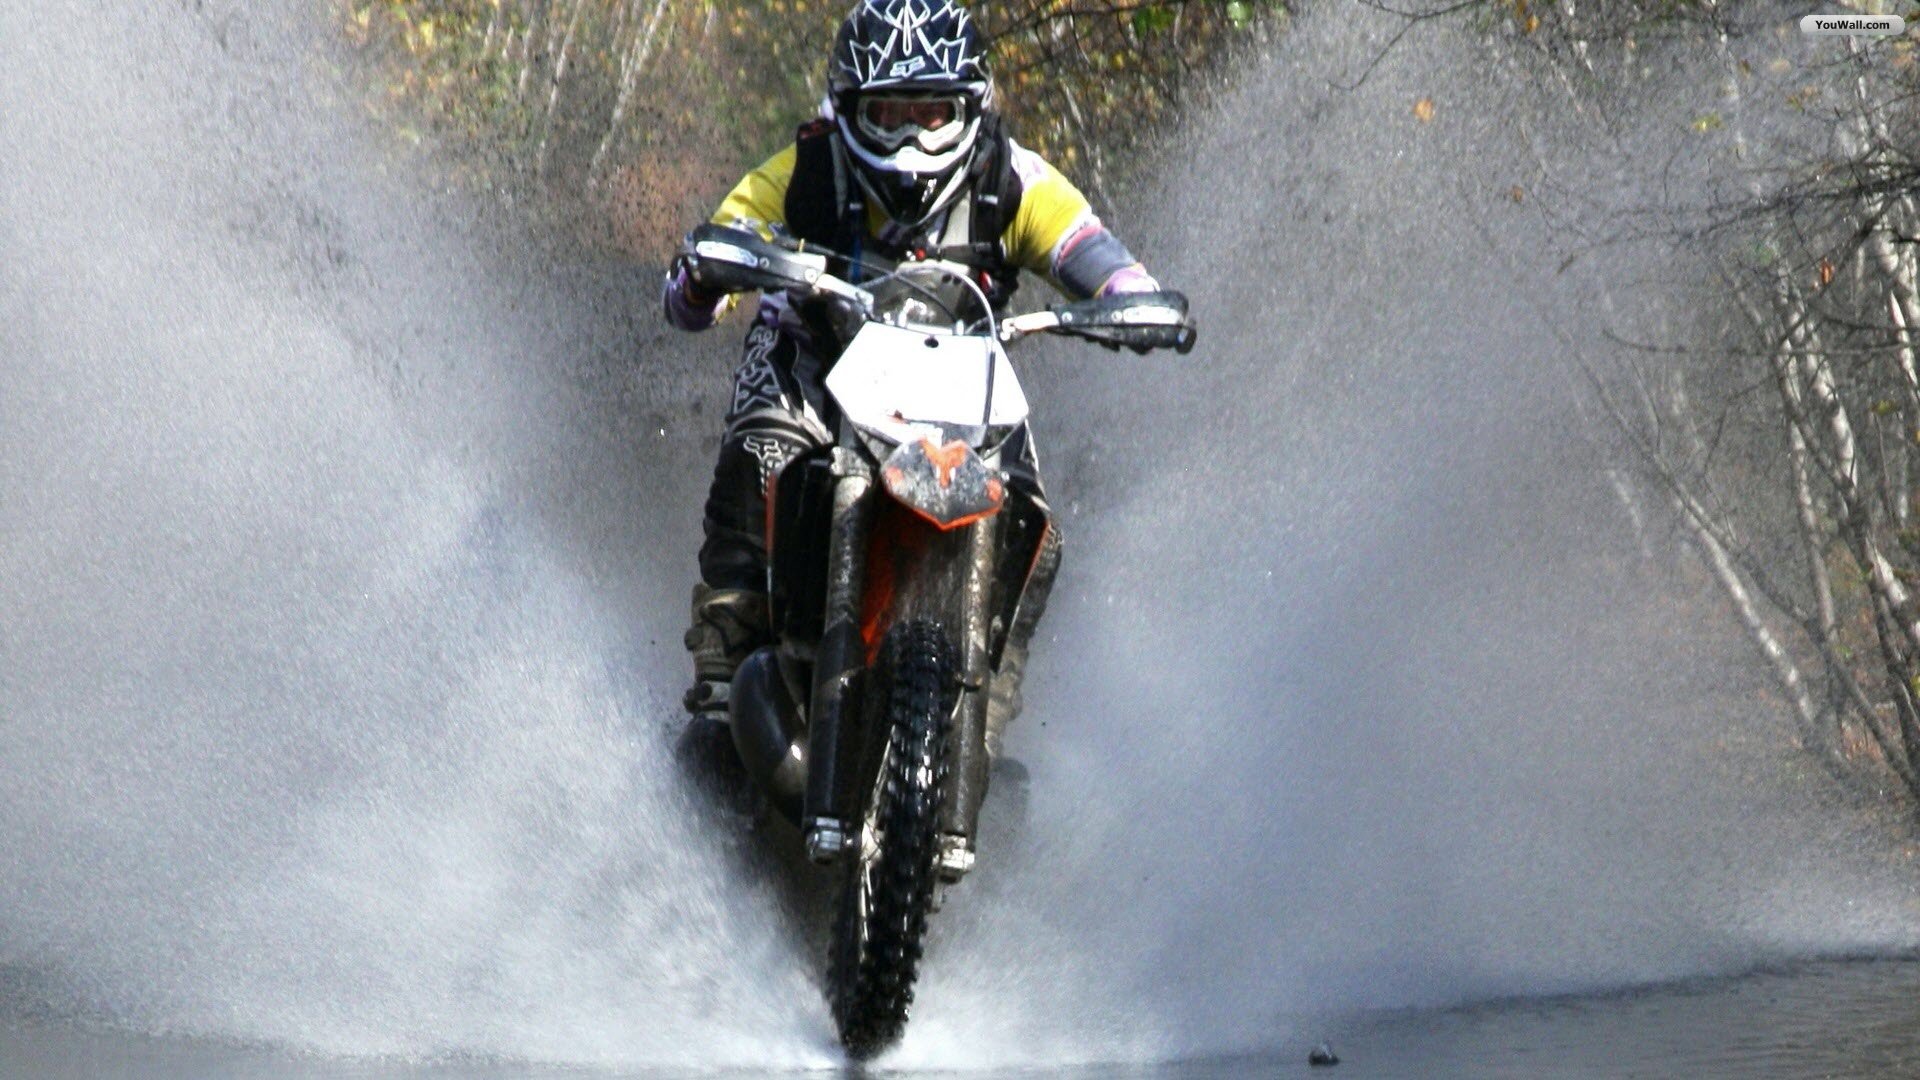 YouWall - Motocross Water Splash Wallpaper - wallpaper,wallpapers ...